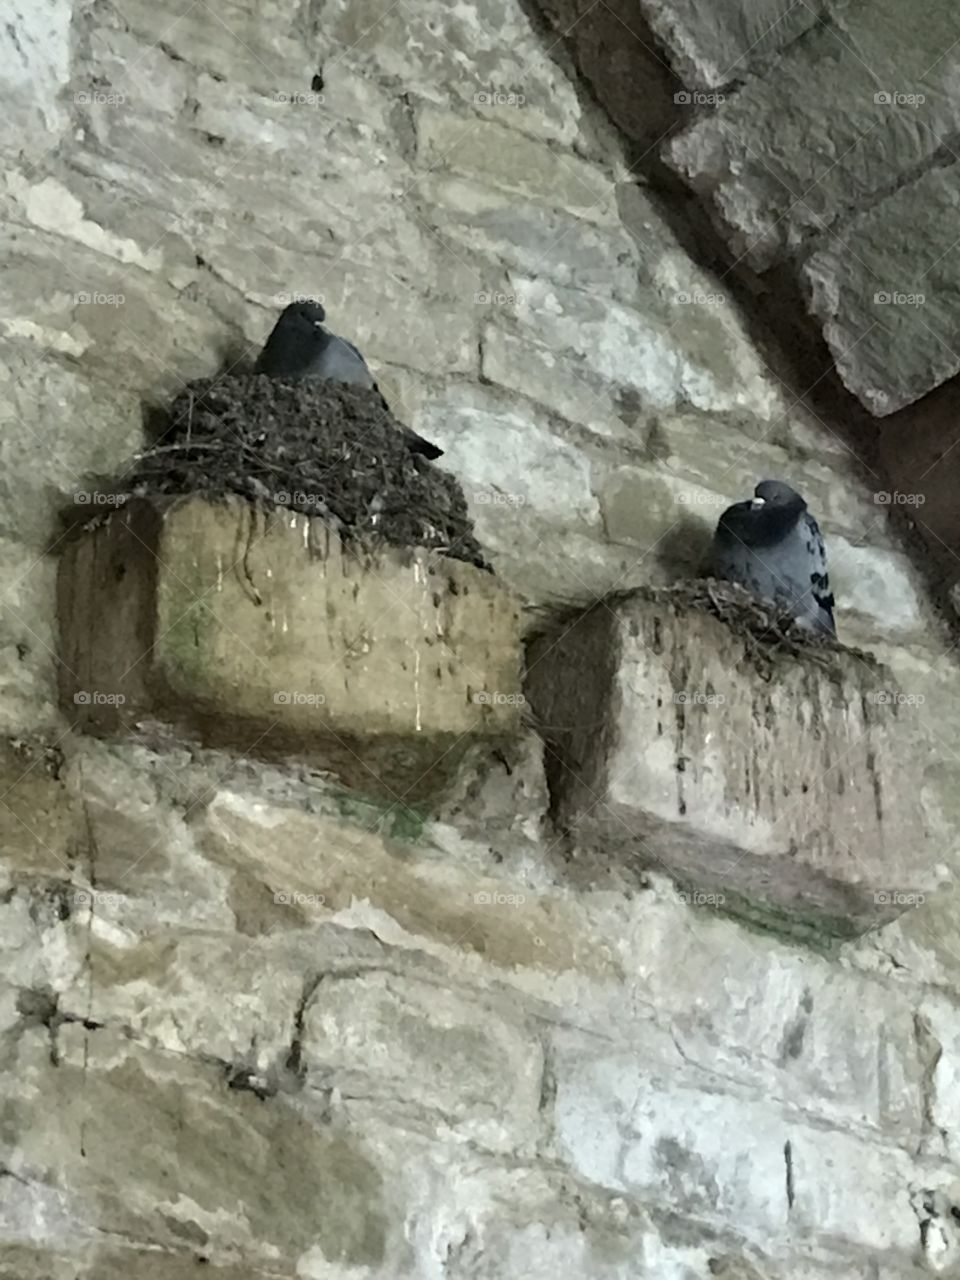 Nesting birds
